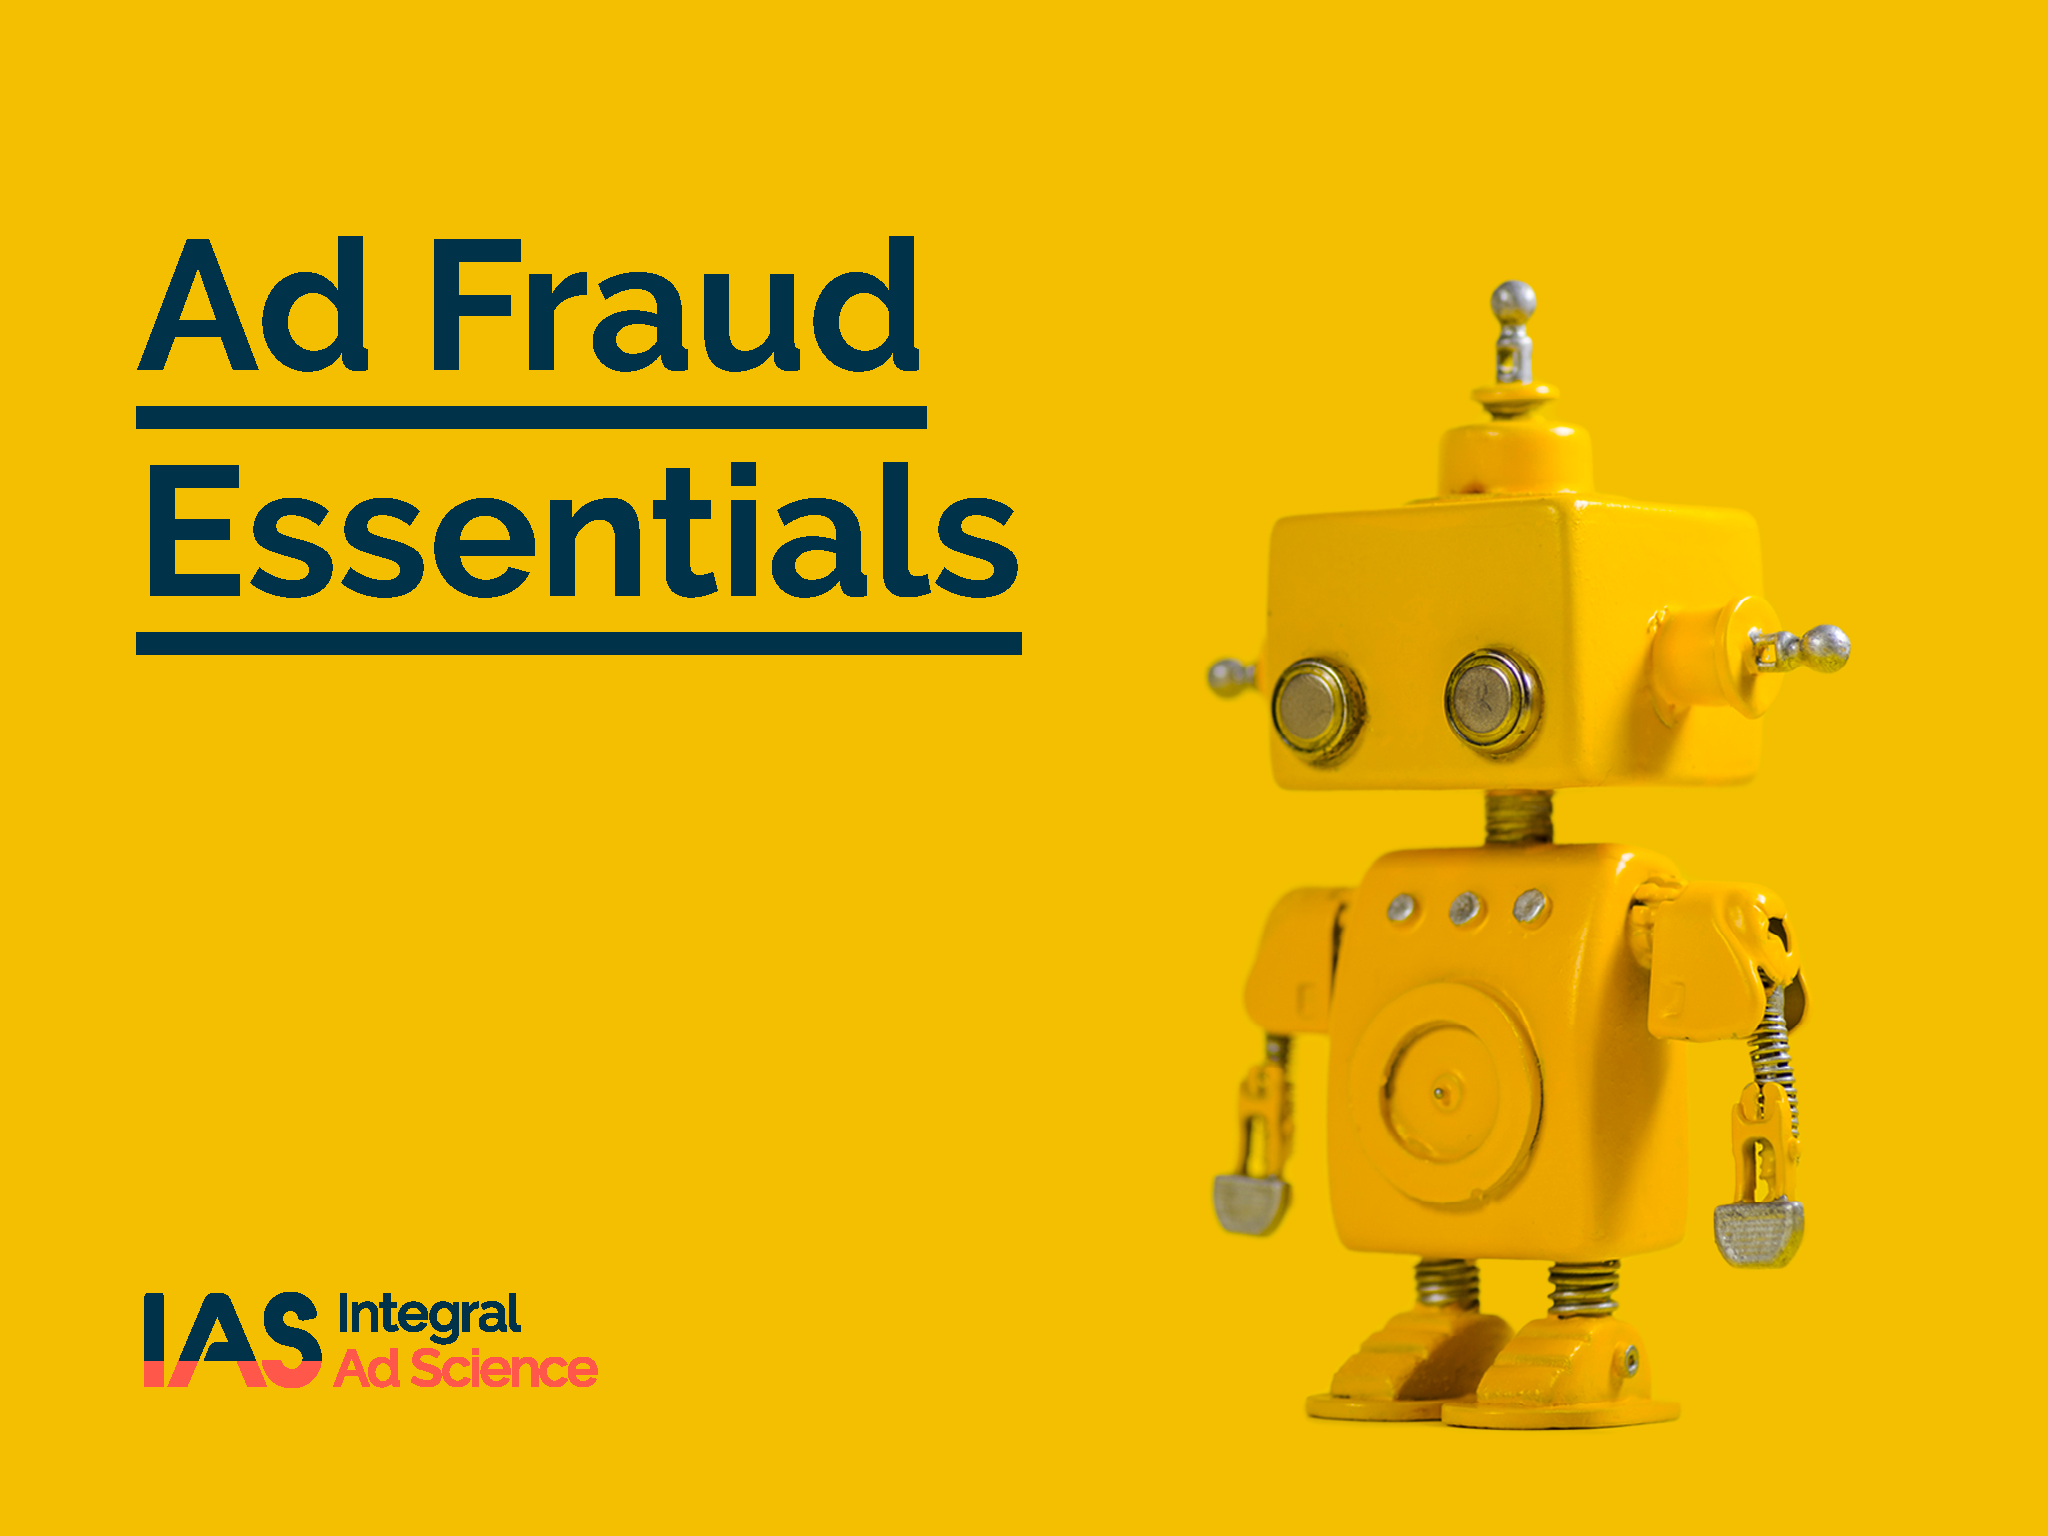 Ad Fraud Essentials Guide